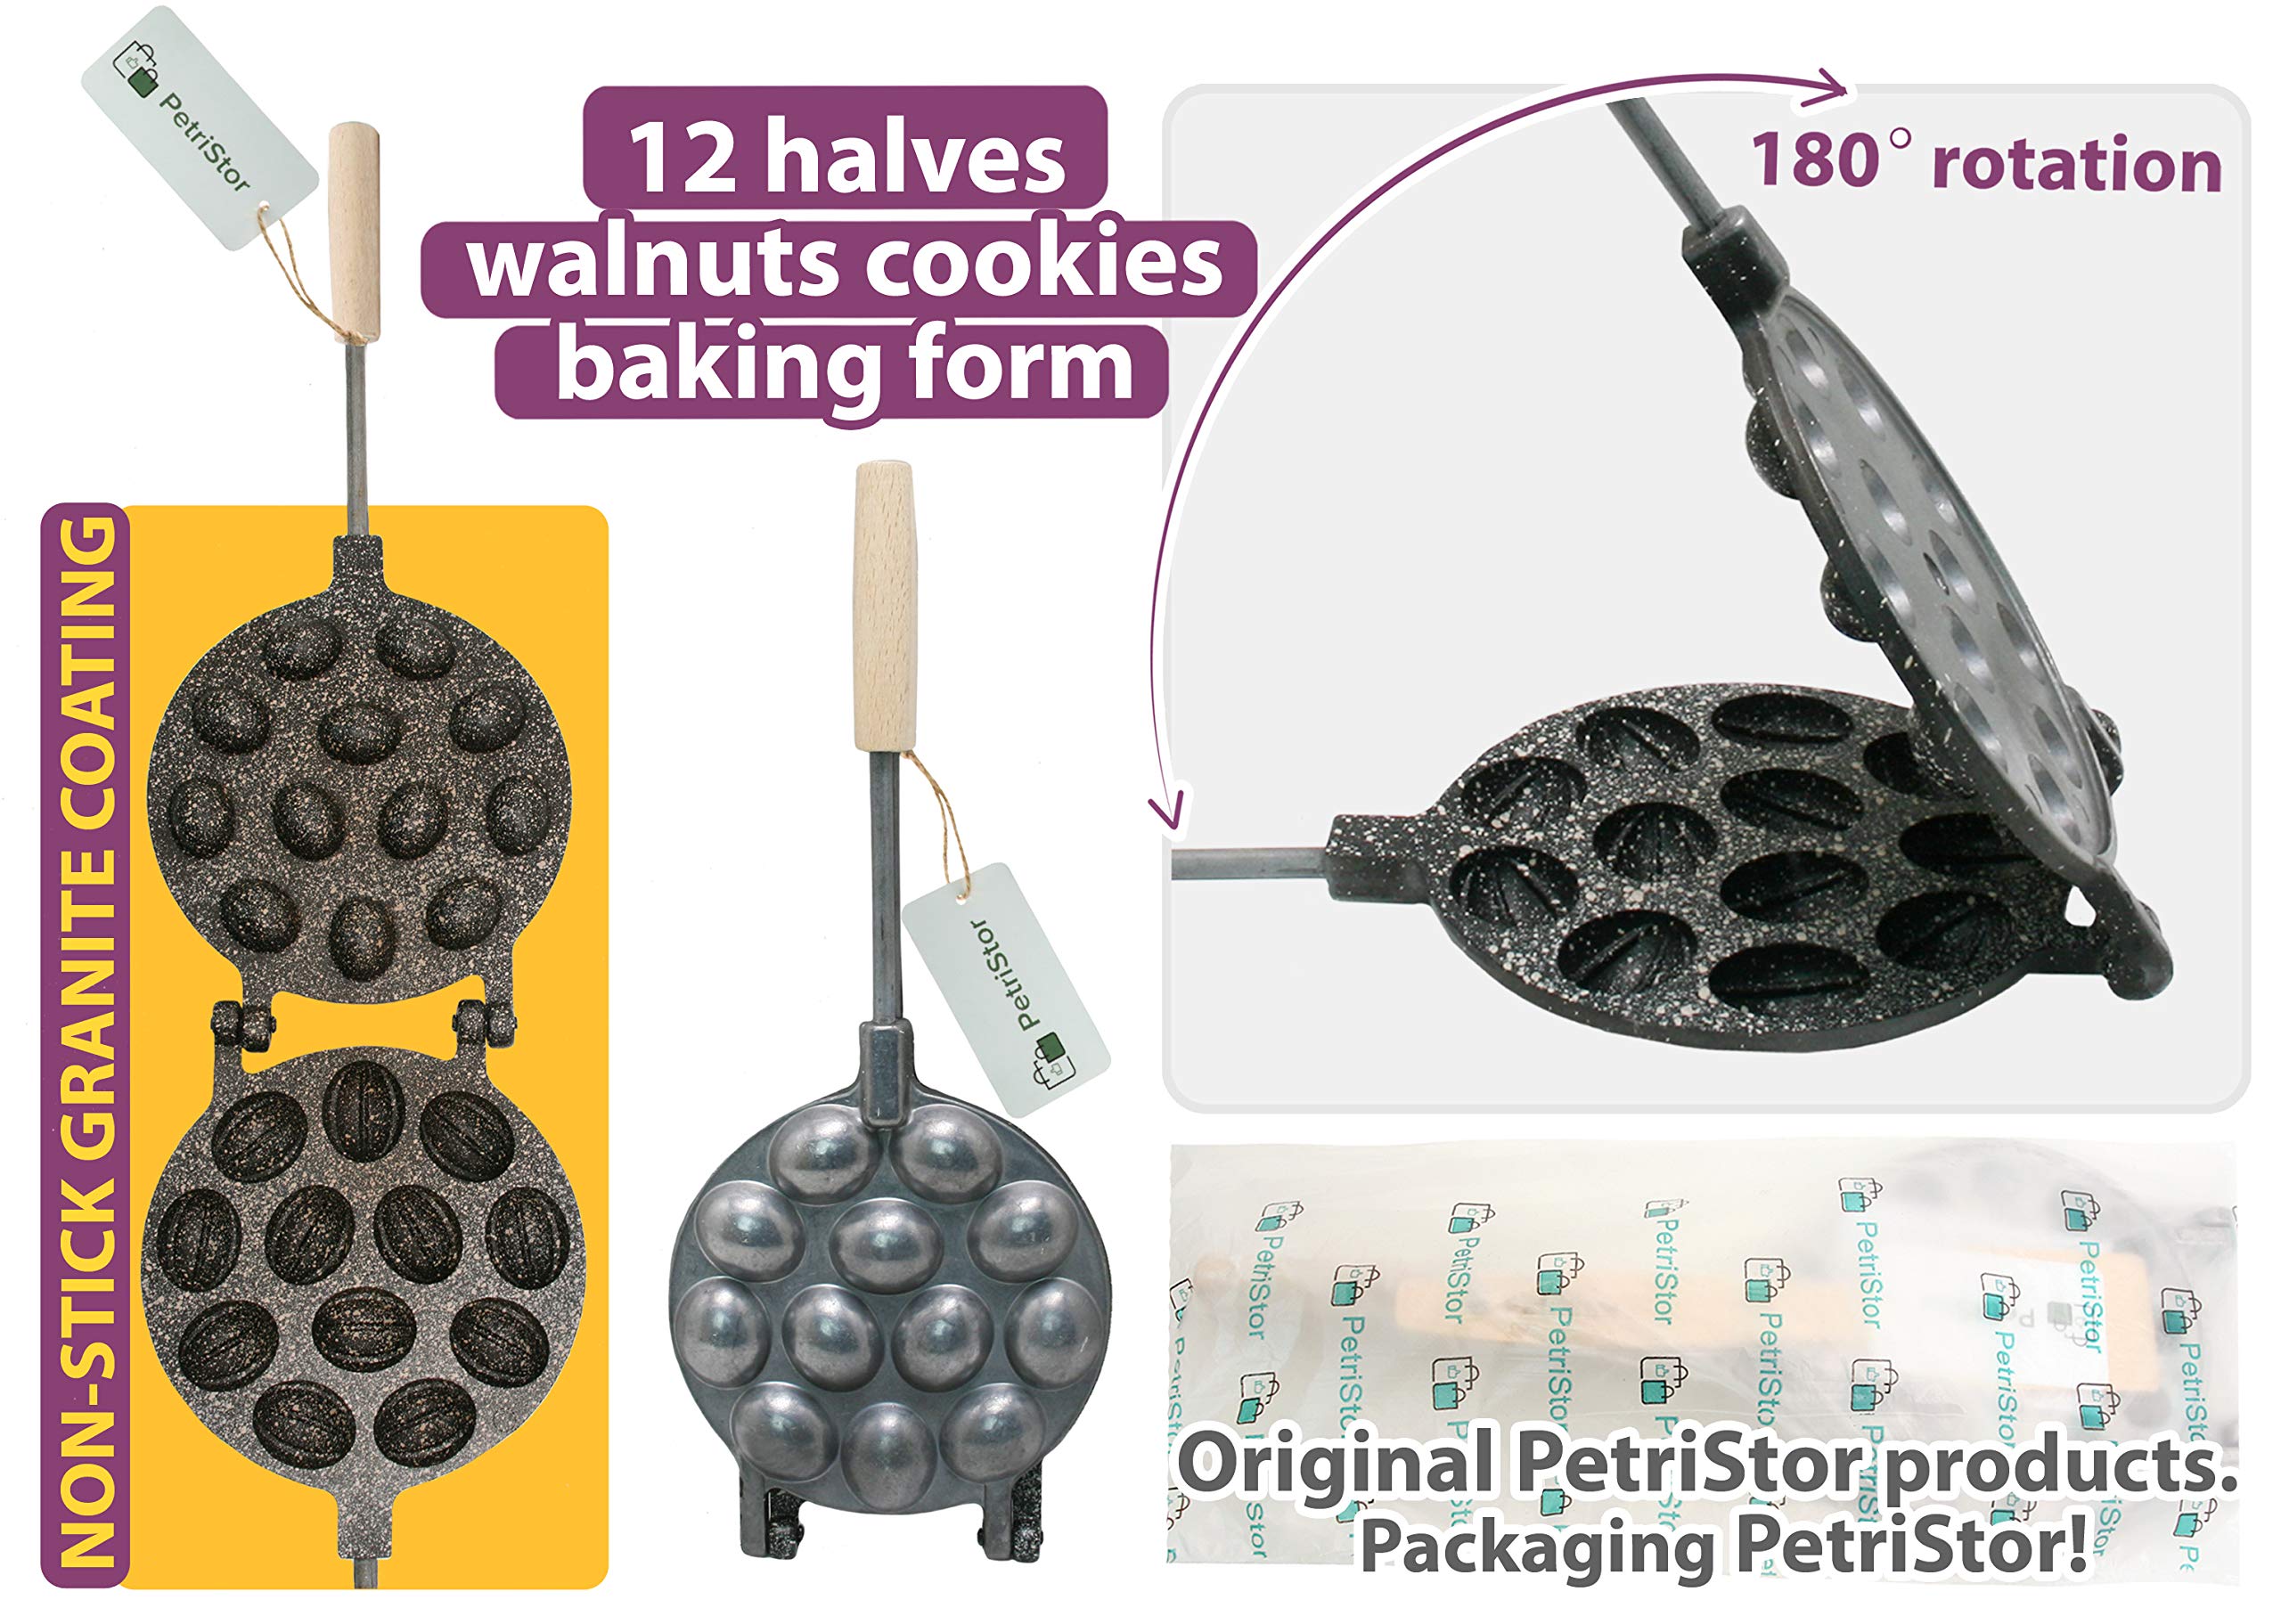 Walnut Cookie Maker 12 halves non-stick coating granite stone Cookies Pastry